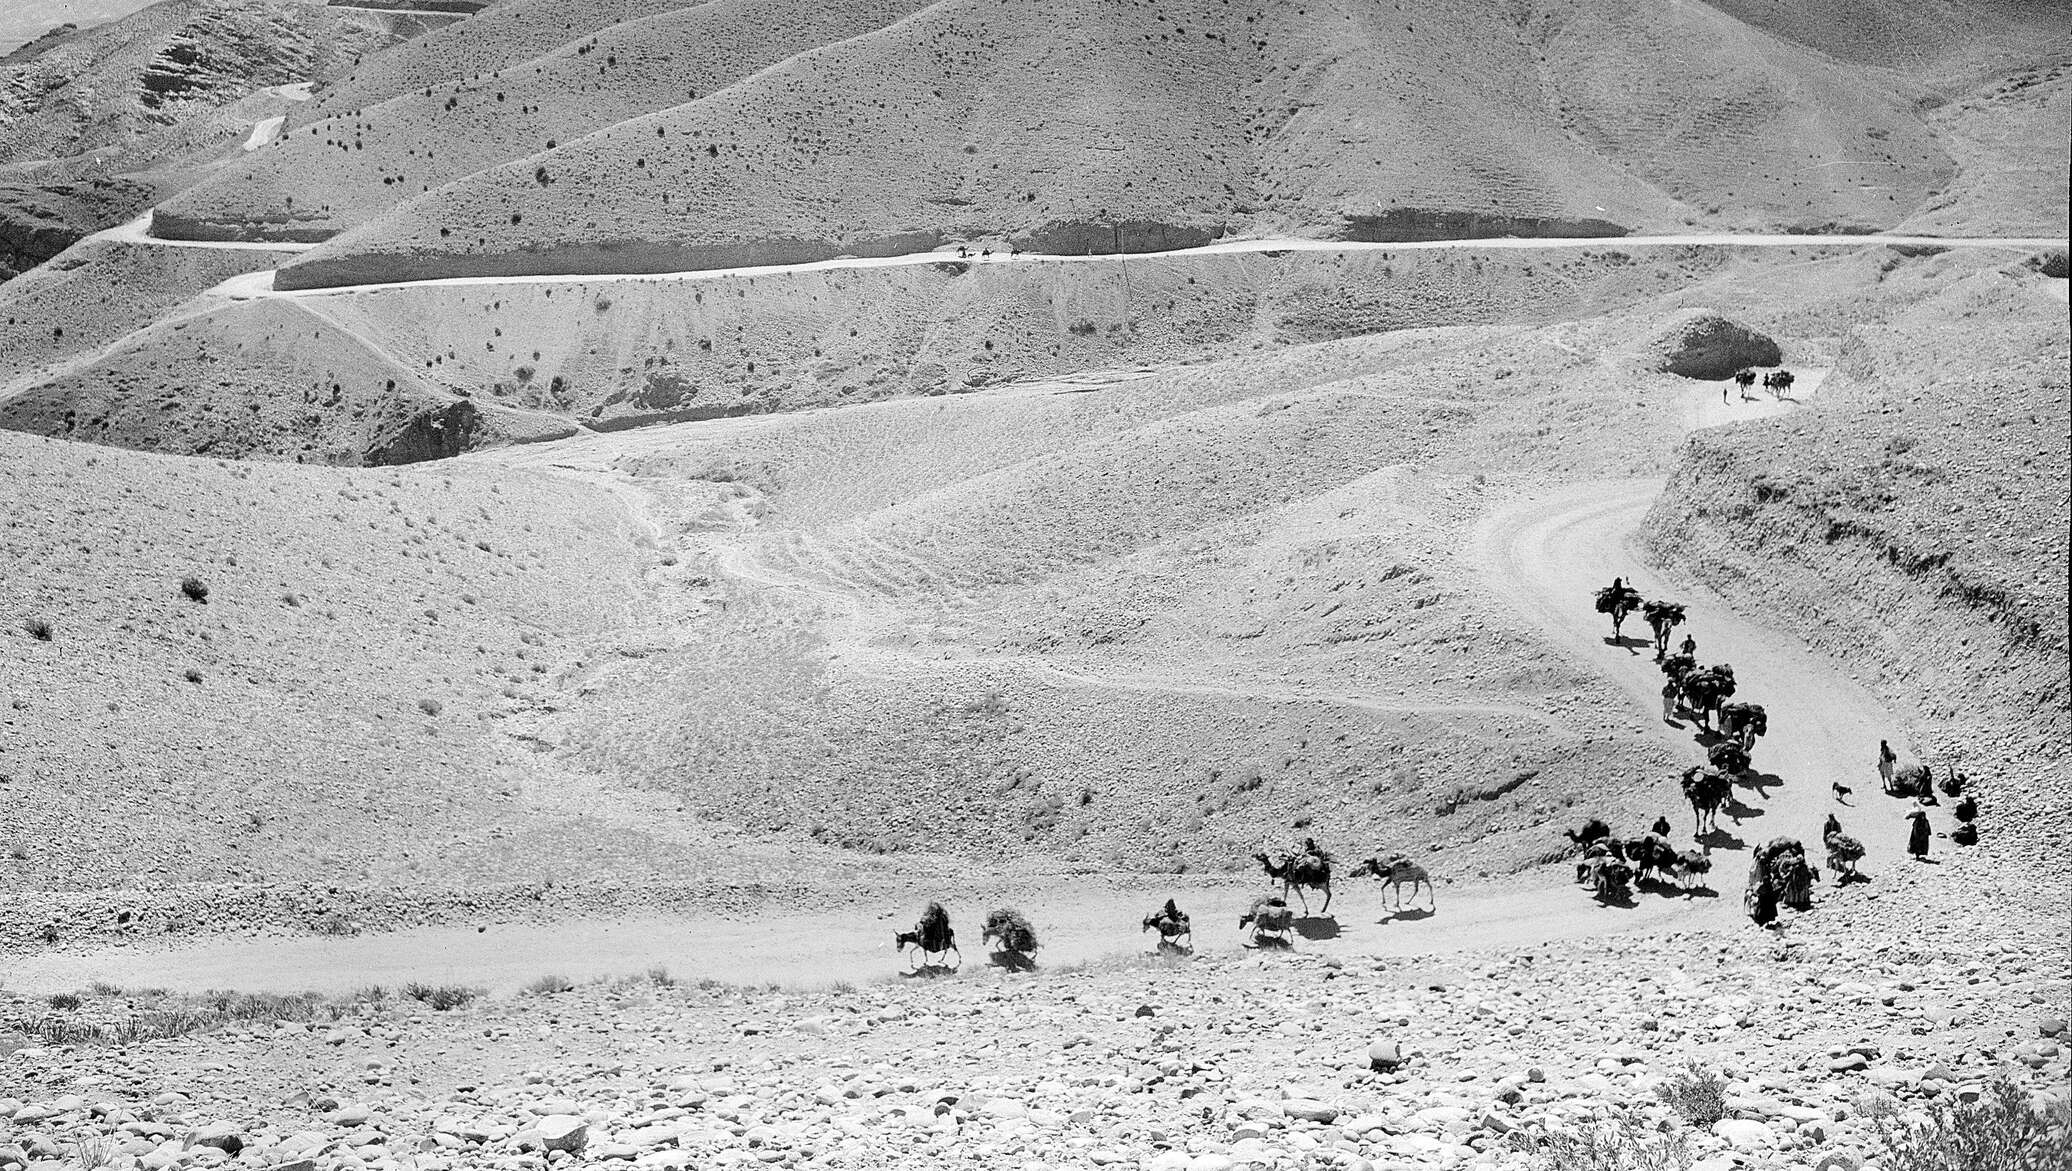 Горный караван. Пустыня Регистан Афганистан. Кишлак Афганистан 1960. Кабул Афганистане 1979. Перевал Рабати Мирза Афганистан.